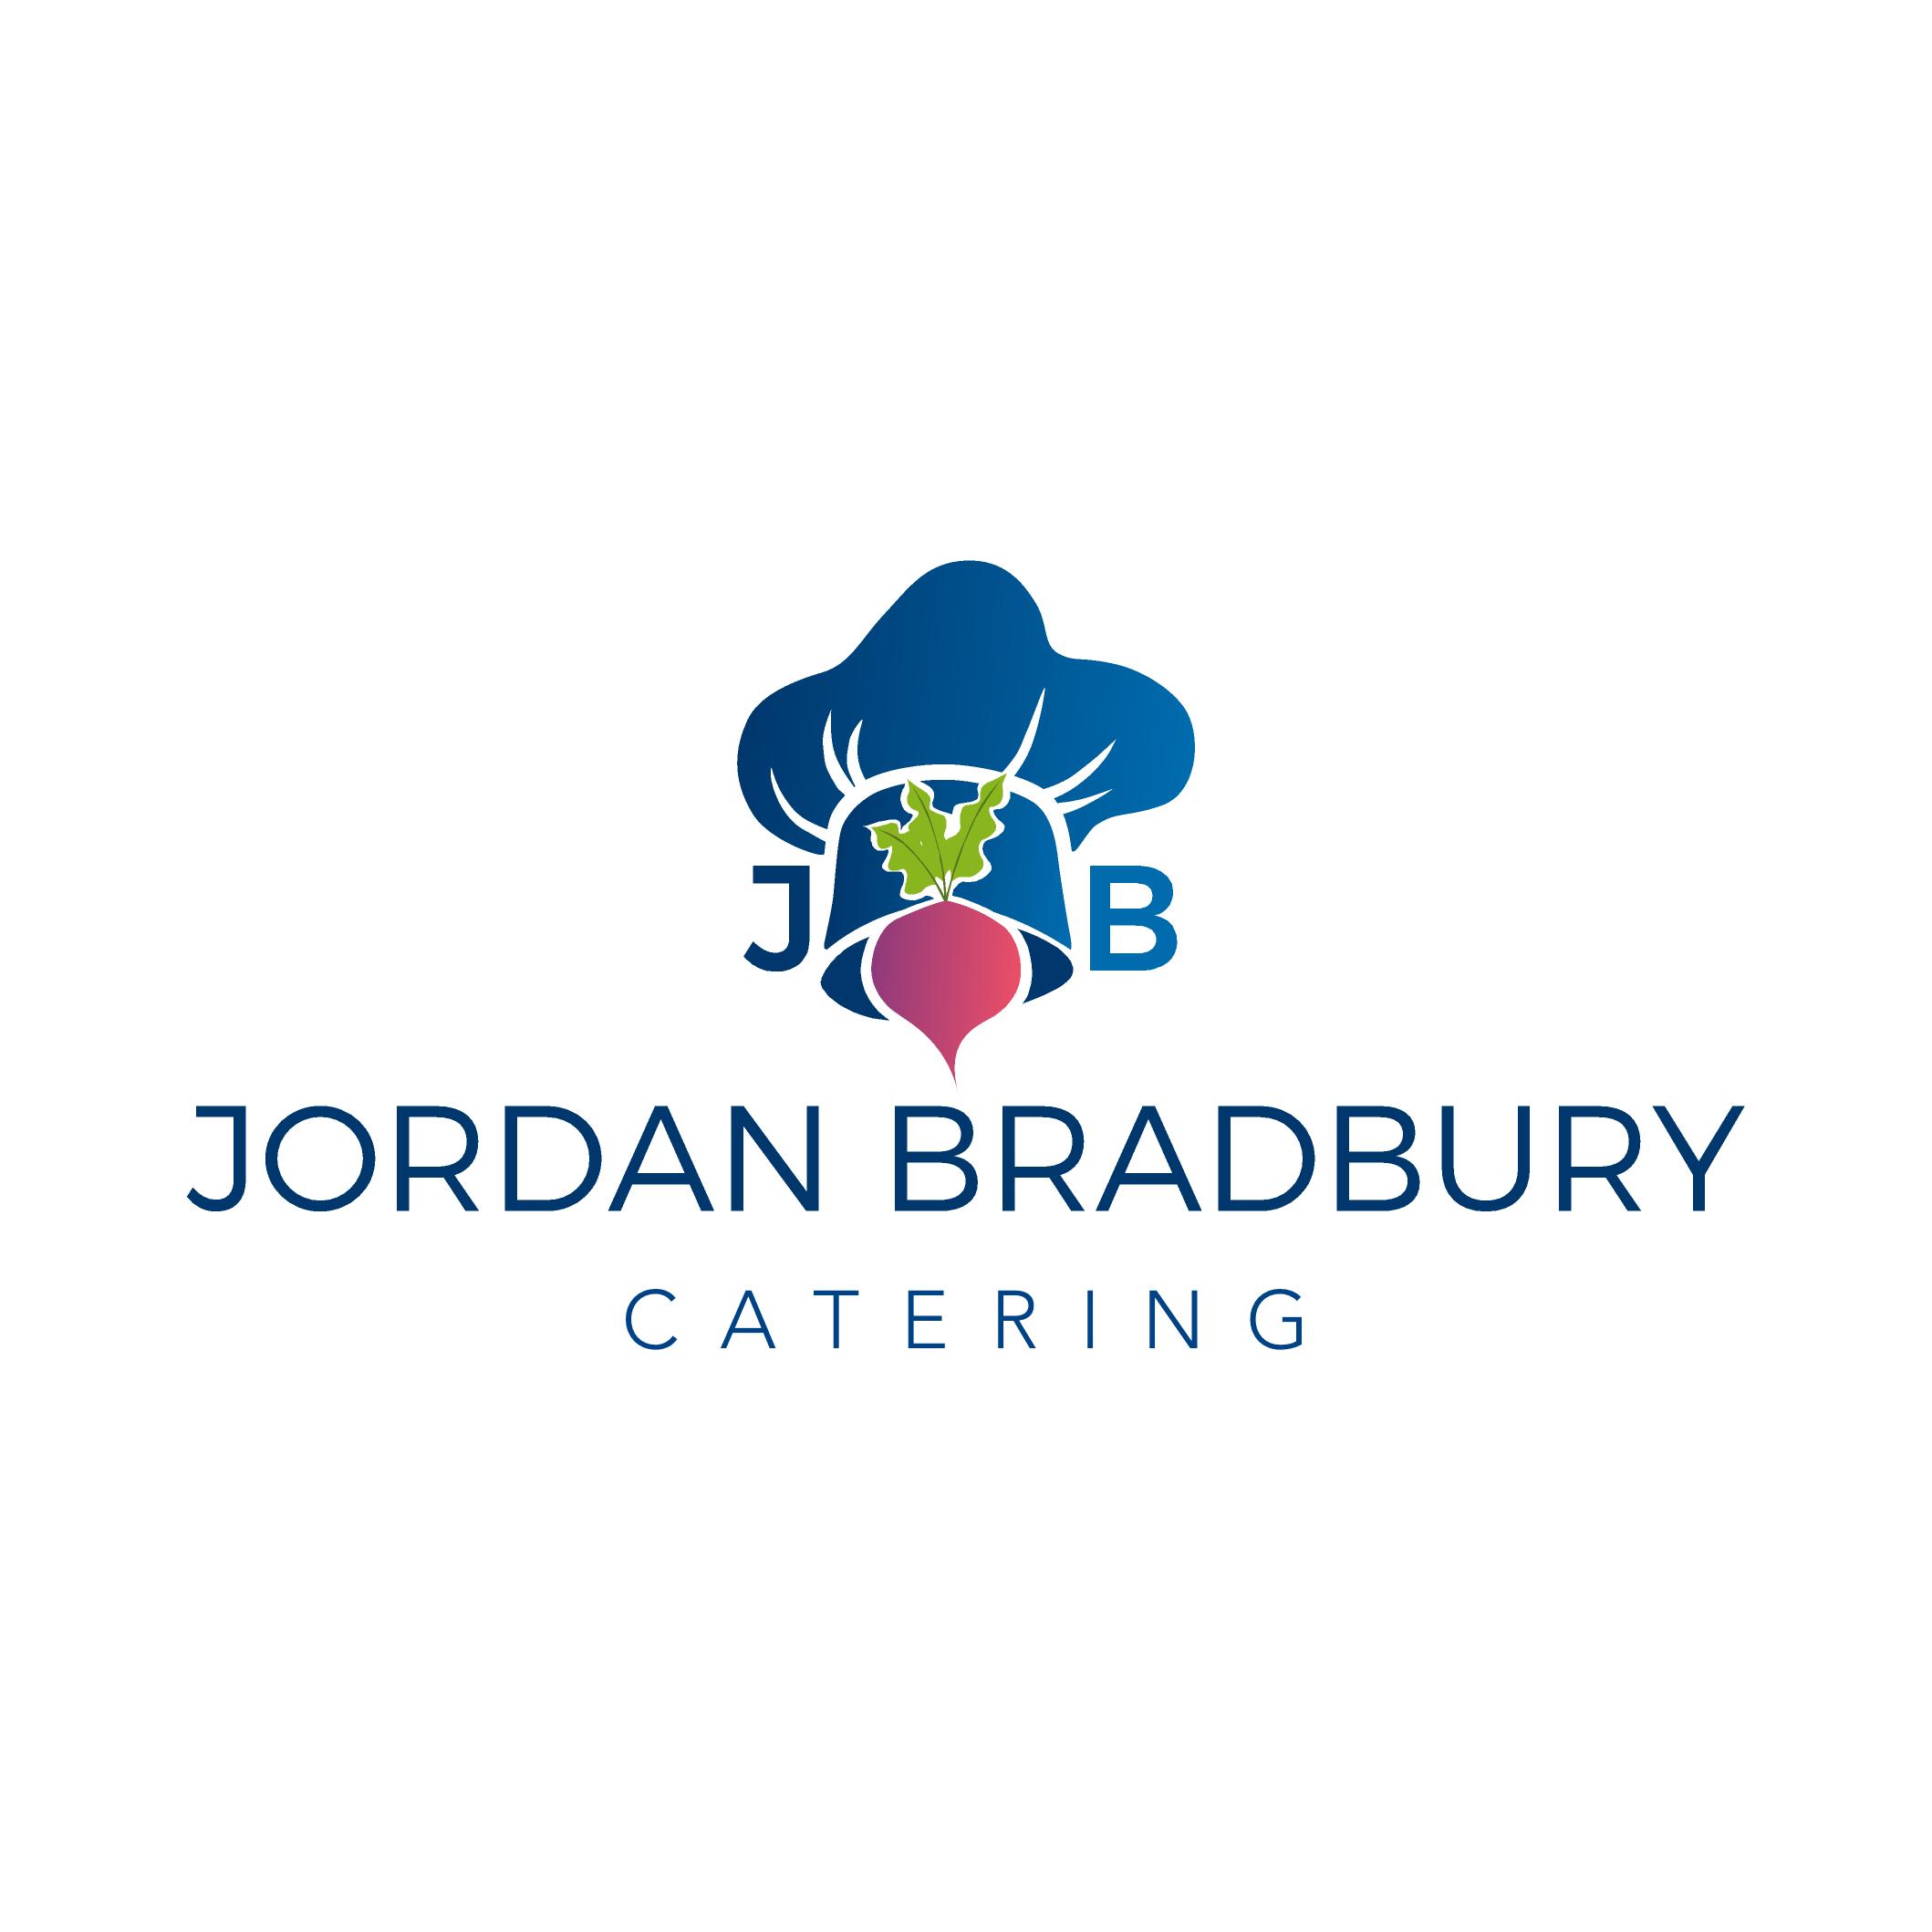 Logo Design entry 1748869 submitted by haye to the Logo Design for Jordan Bradbury Catering  run by Jebradbury